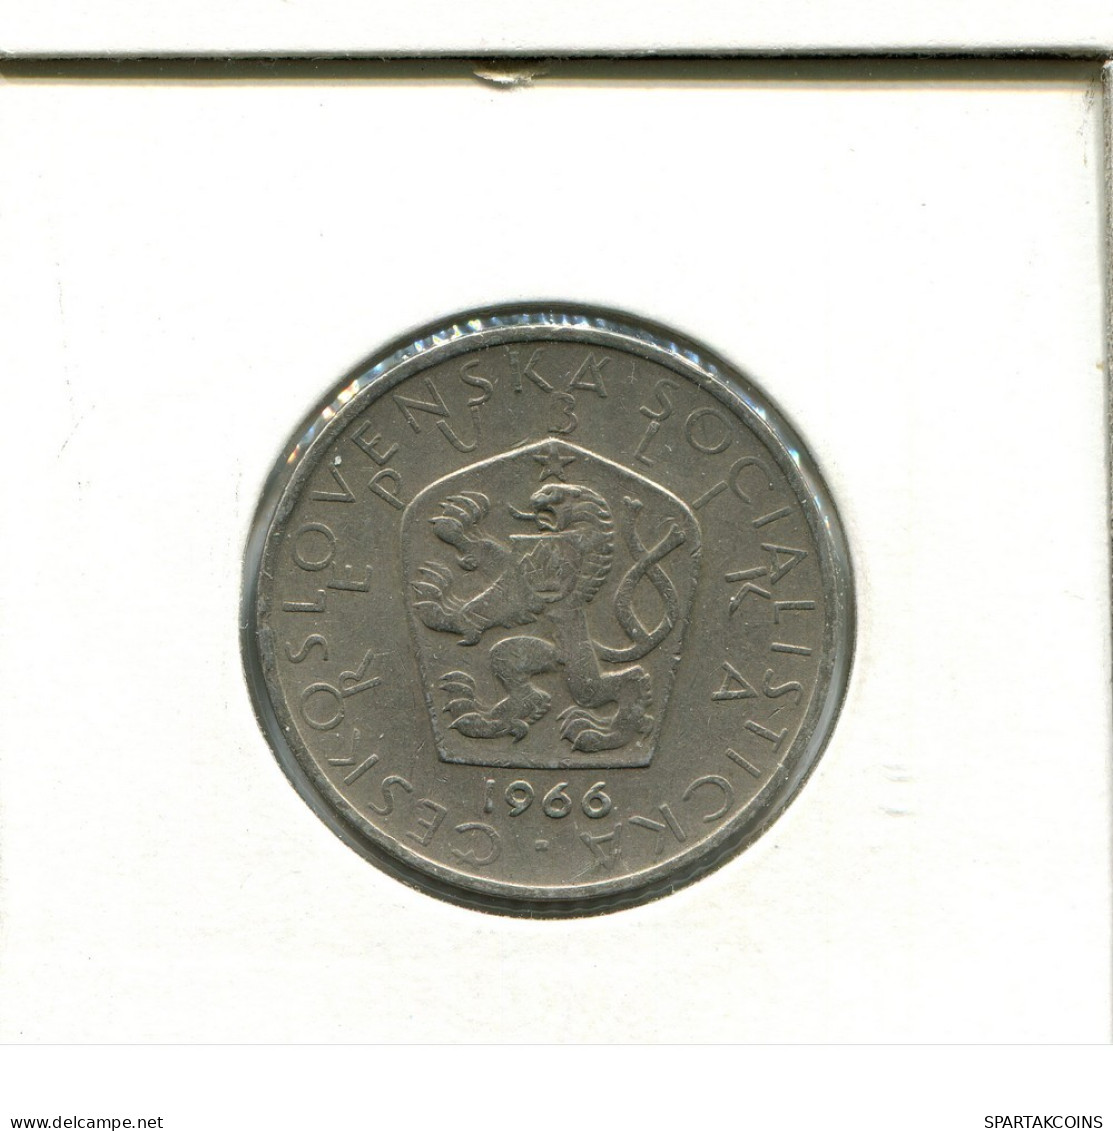 5 KORUN 1966 CZECHOSLOVAKIA Coin #AS985.U.A - Cecoslovacchia